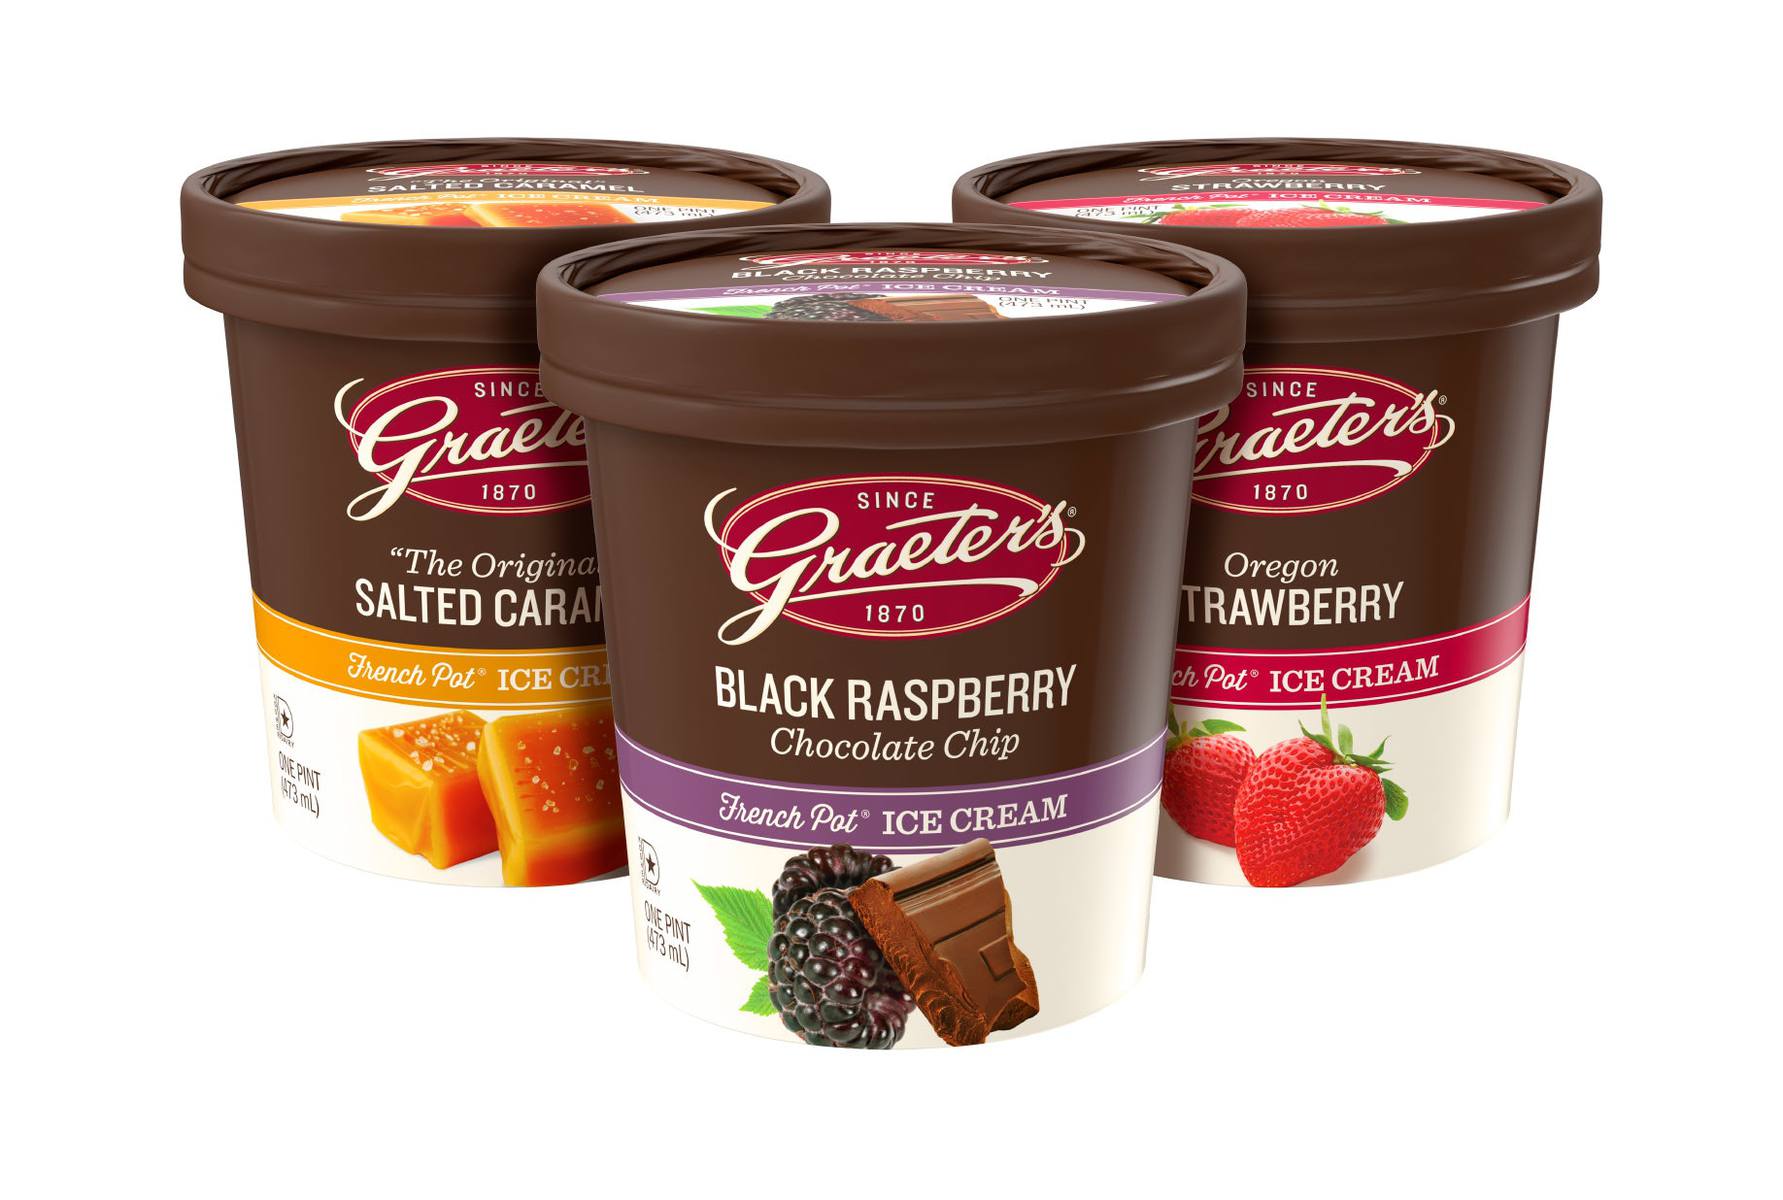 Graeter’s is top Ice cream brands